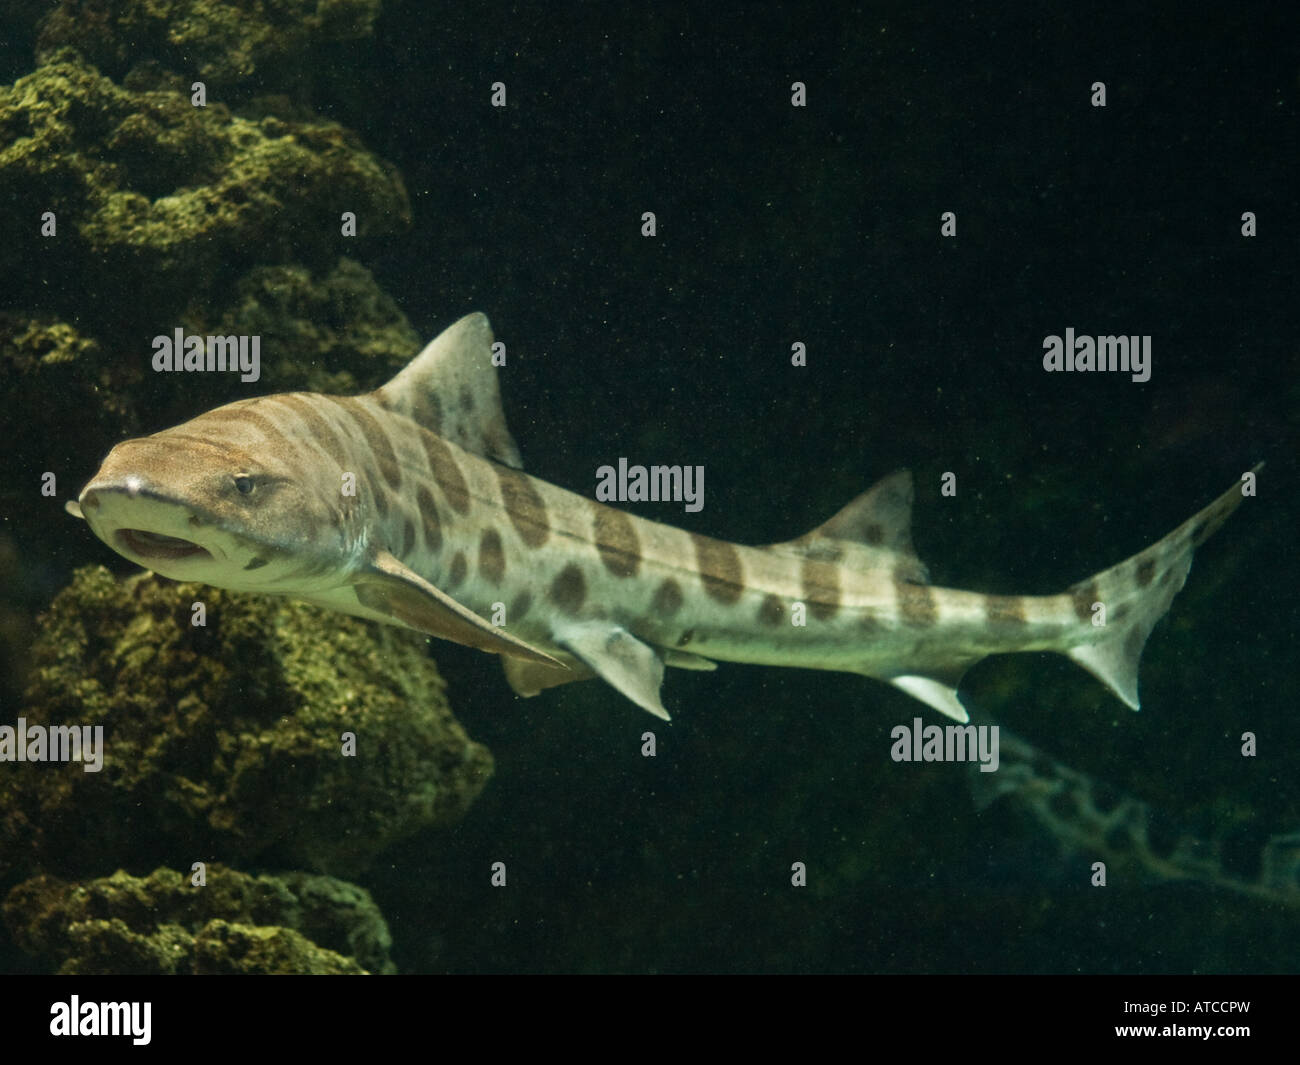 Na-na ... na-na ... na-na ... inserire scary shark musica qui per questo squalo leopardo. Foto Stock